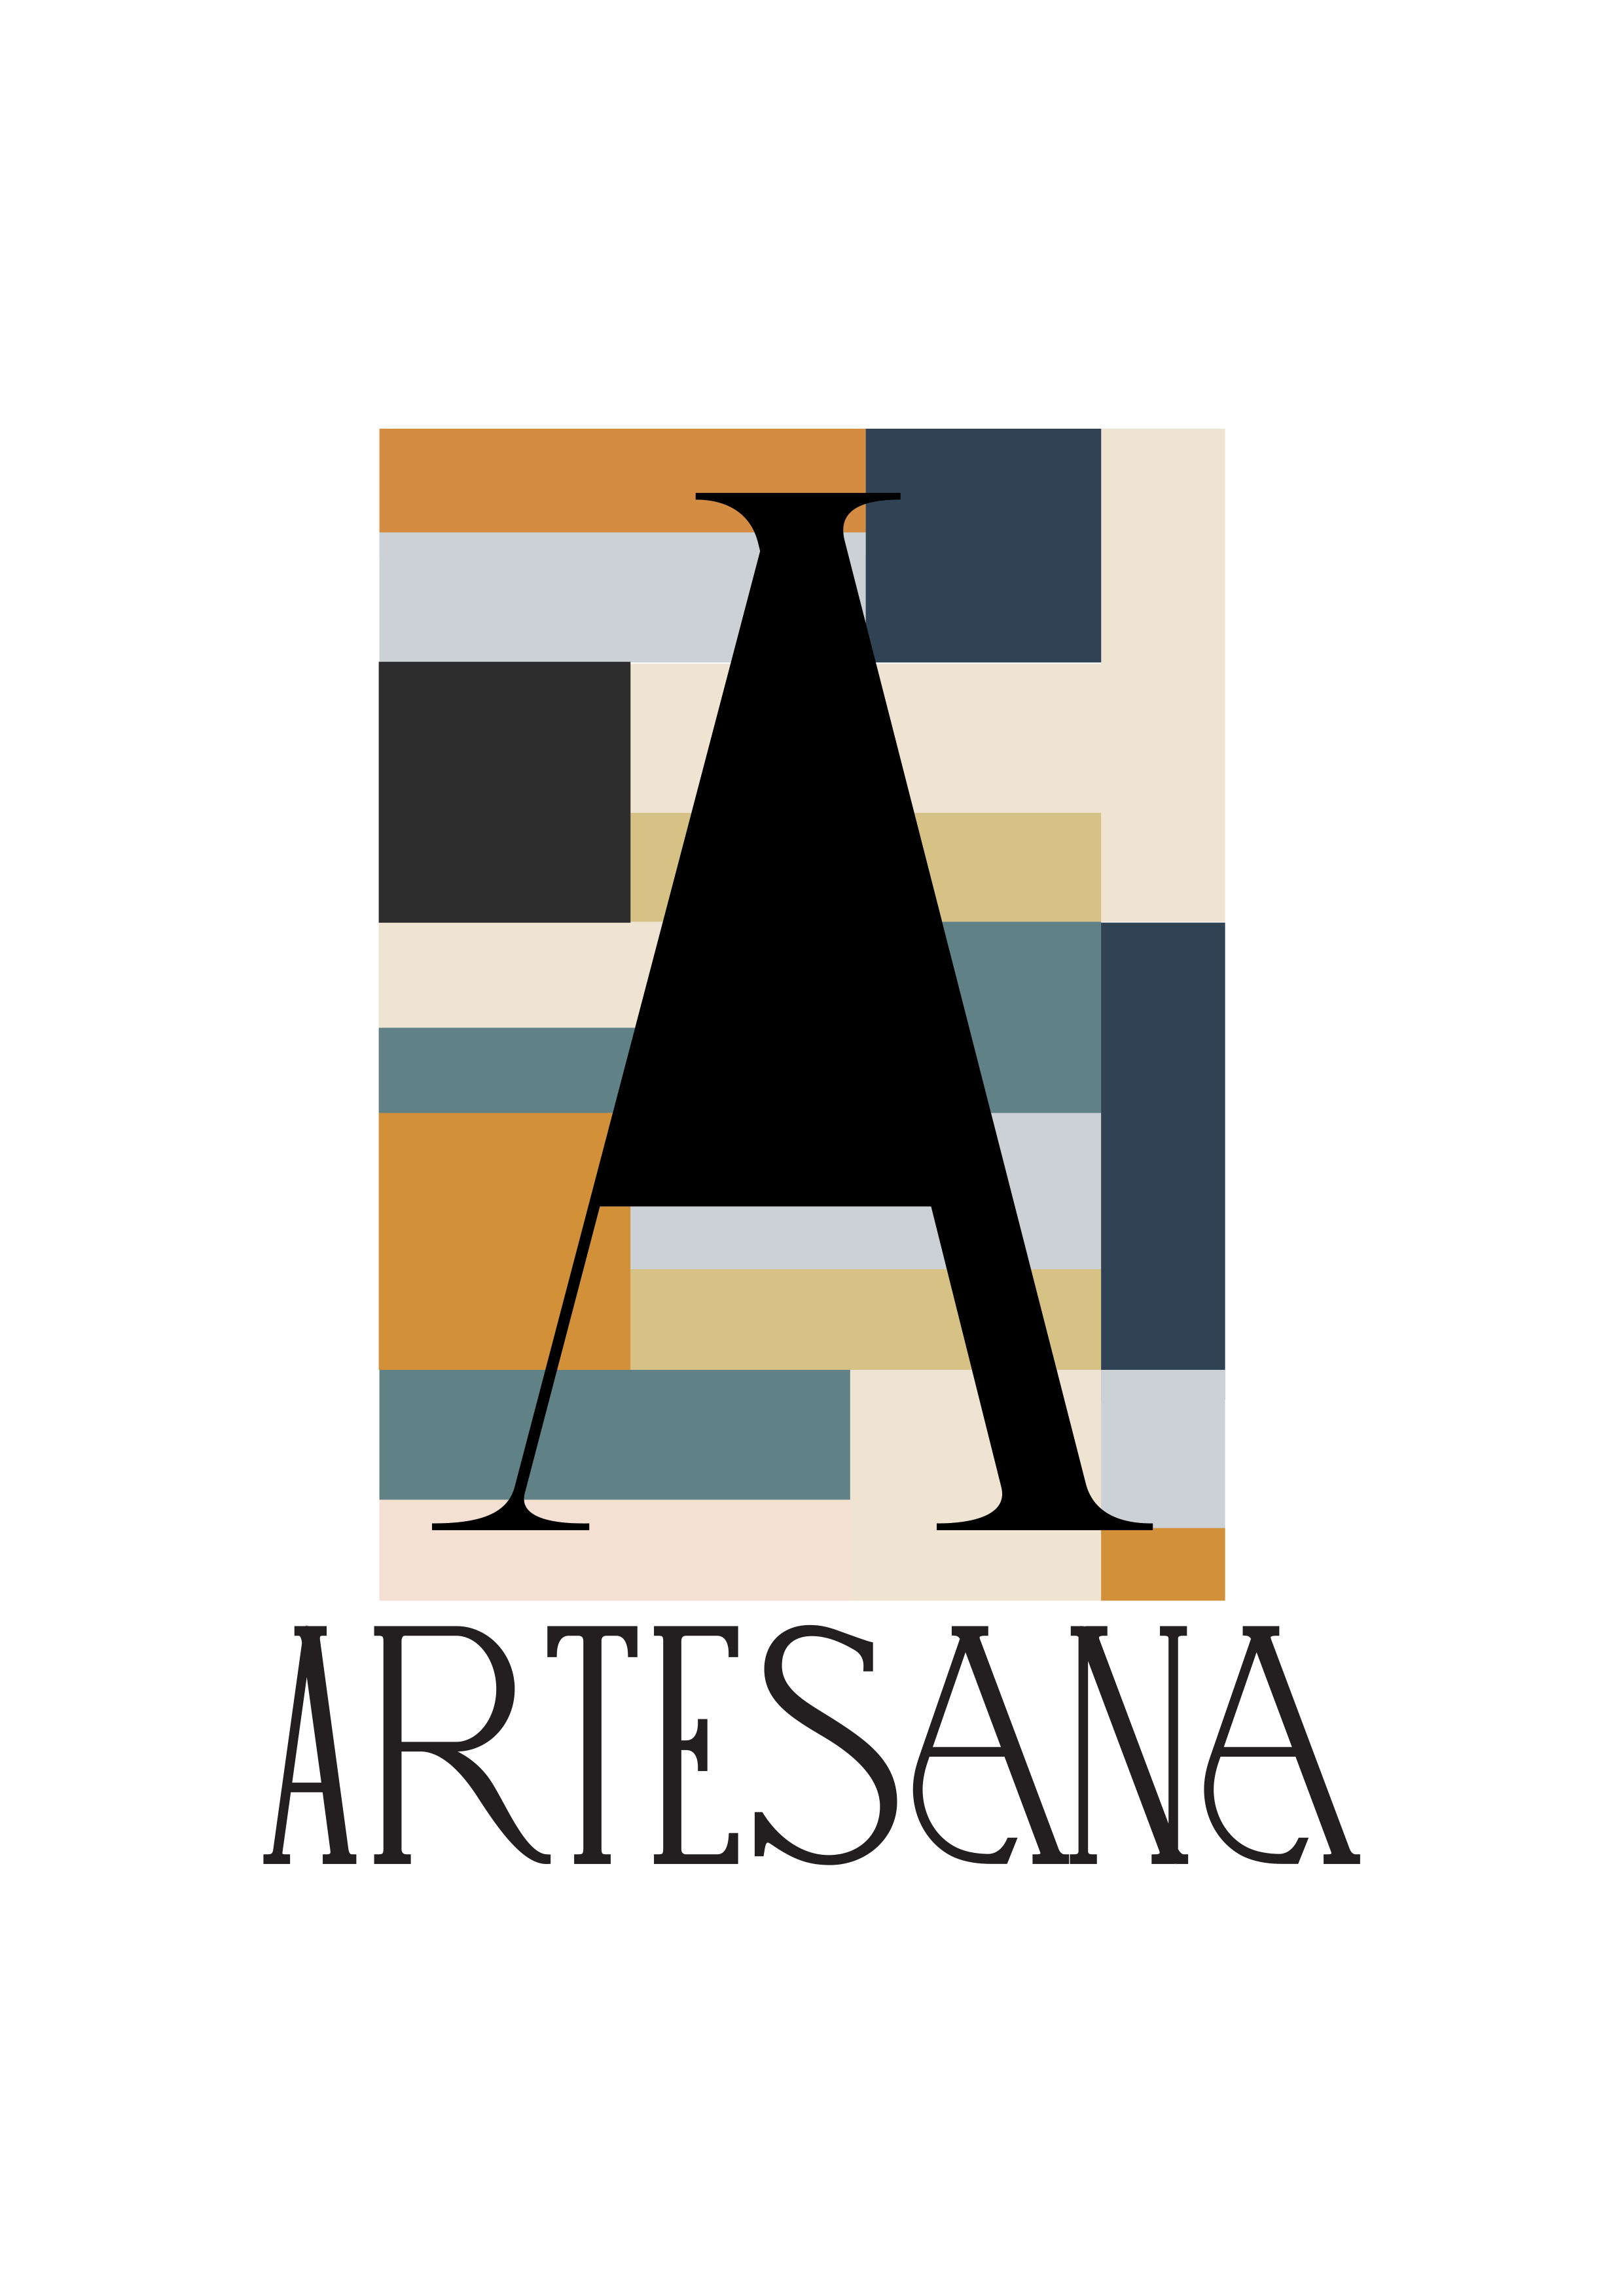 Logo Artesania